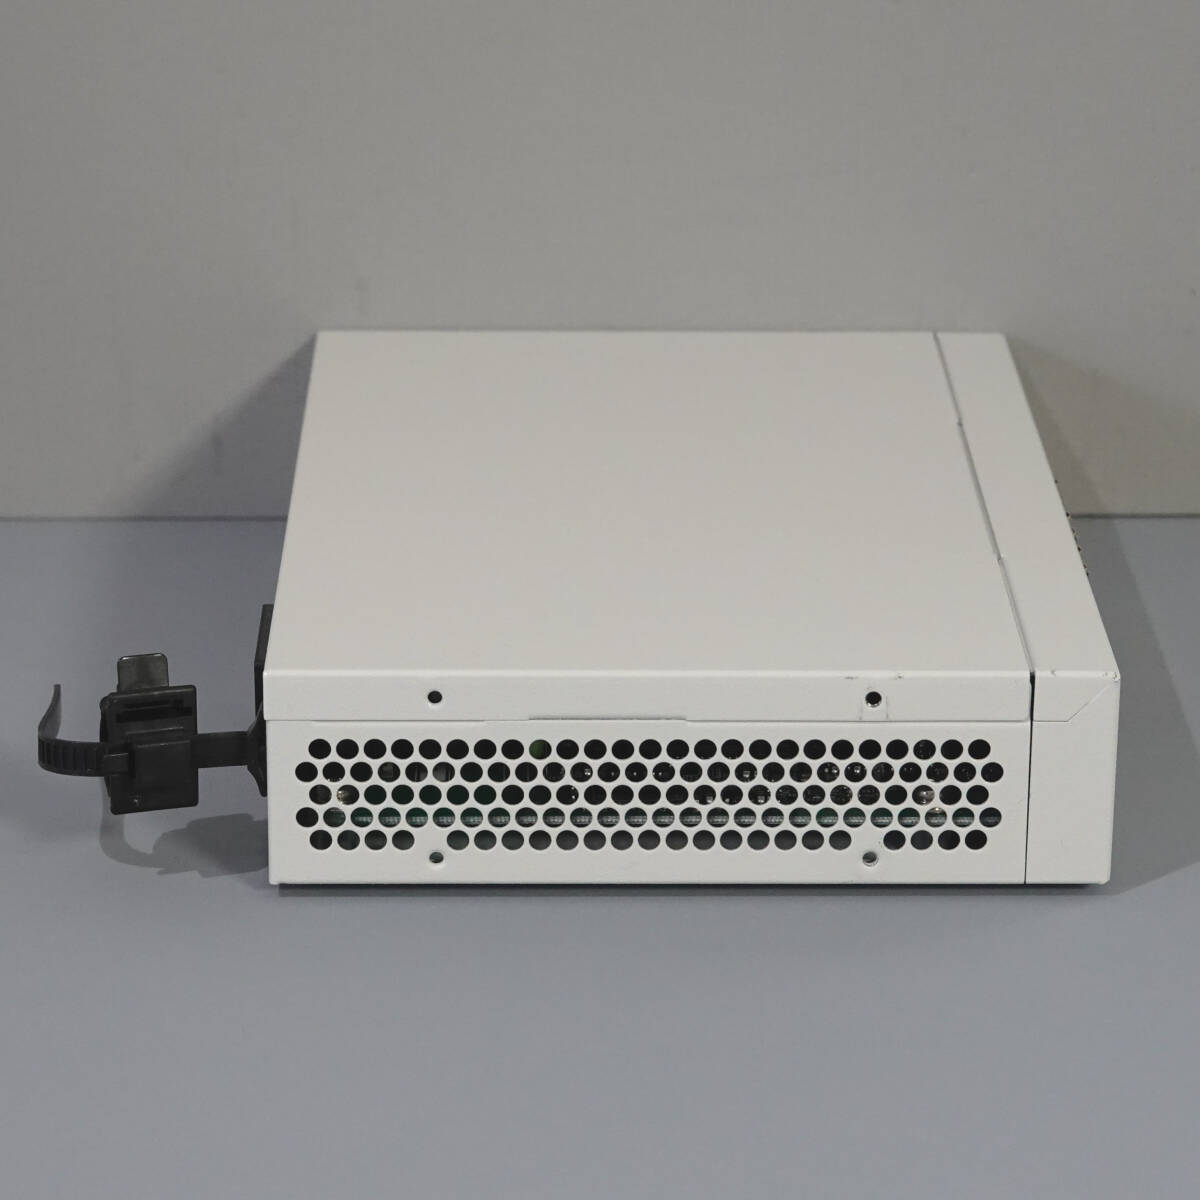 NEC VPN対応高速アクセスルータ UNIVERGE IX2207 ソフトウェア Ver. 10.8.24 【美品・純正電源ケーブル付属】_本体左側面